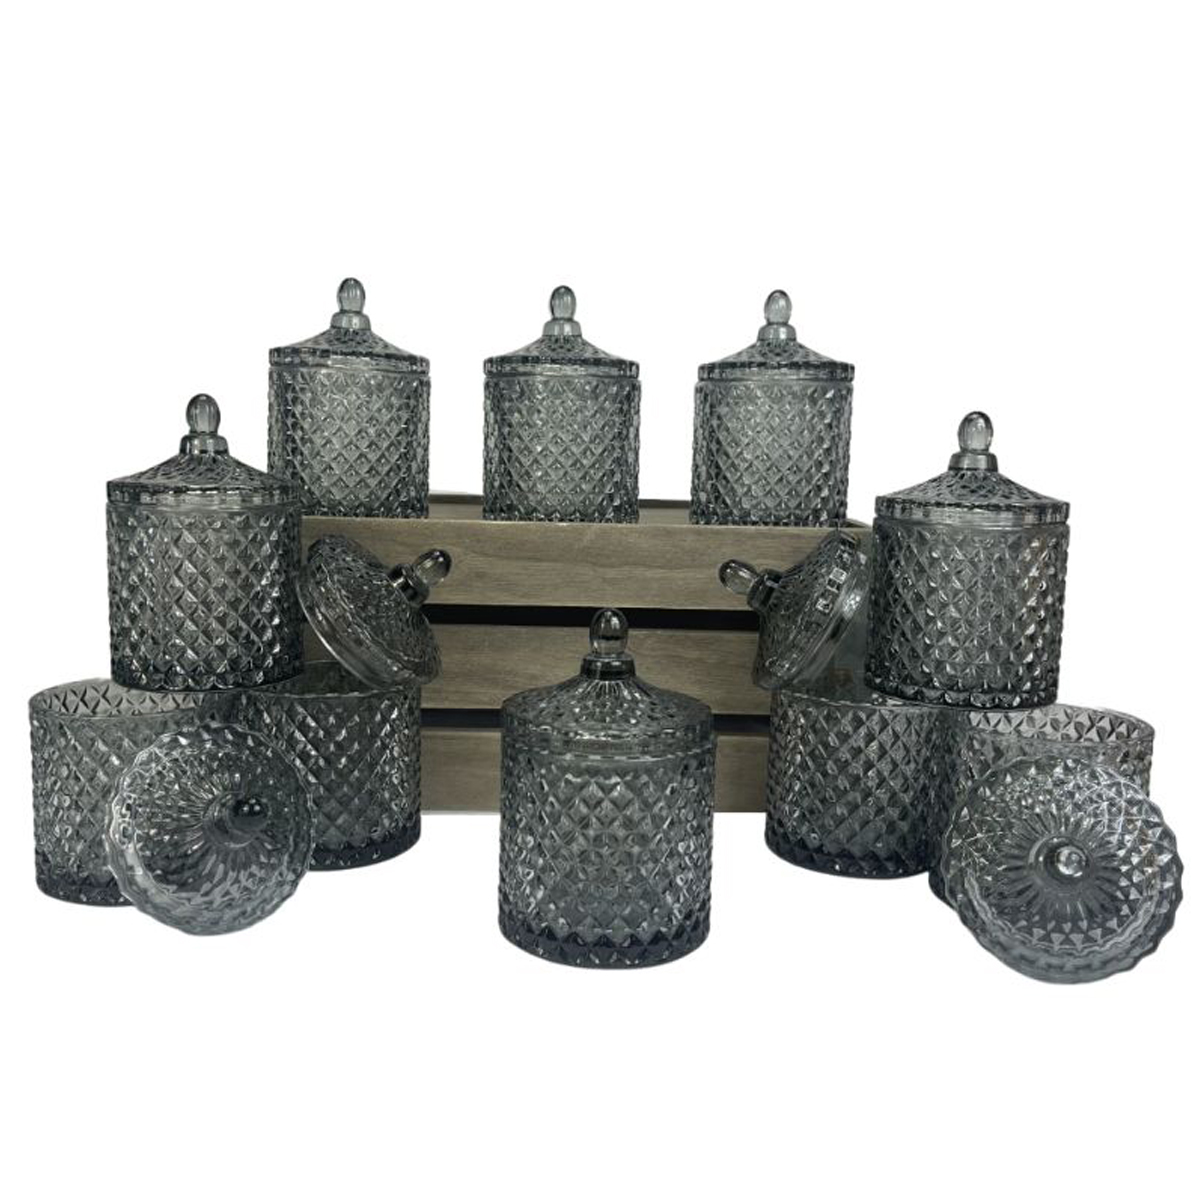 Charcoal candle jars